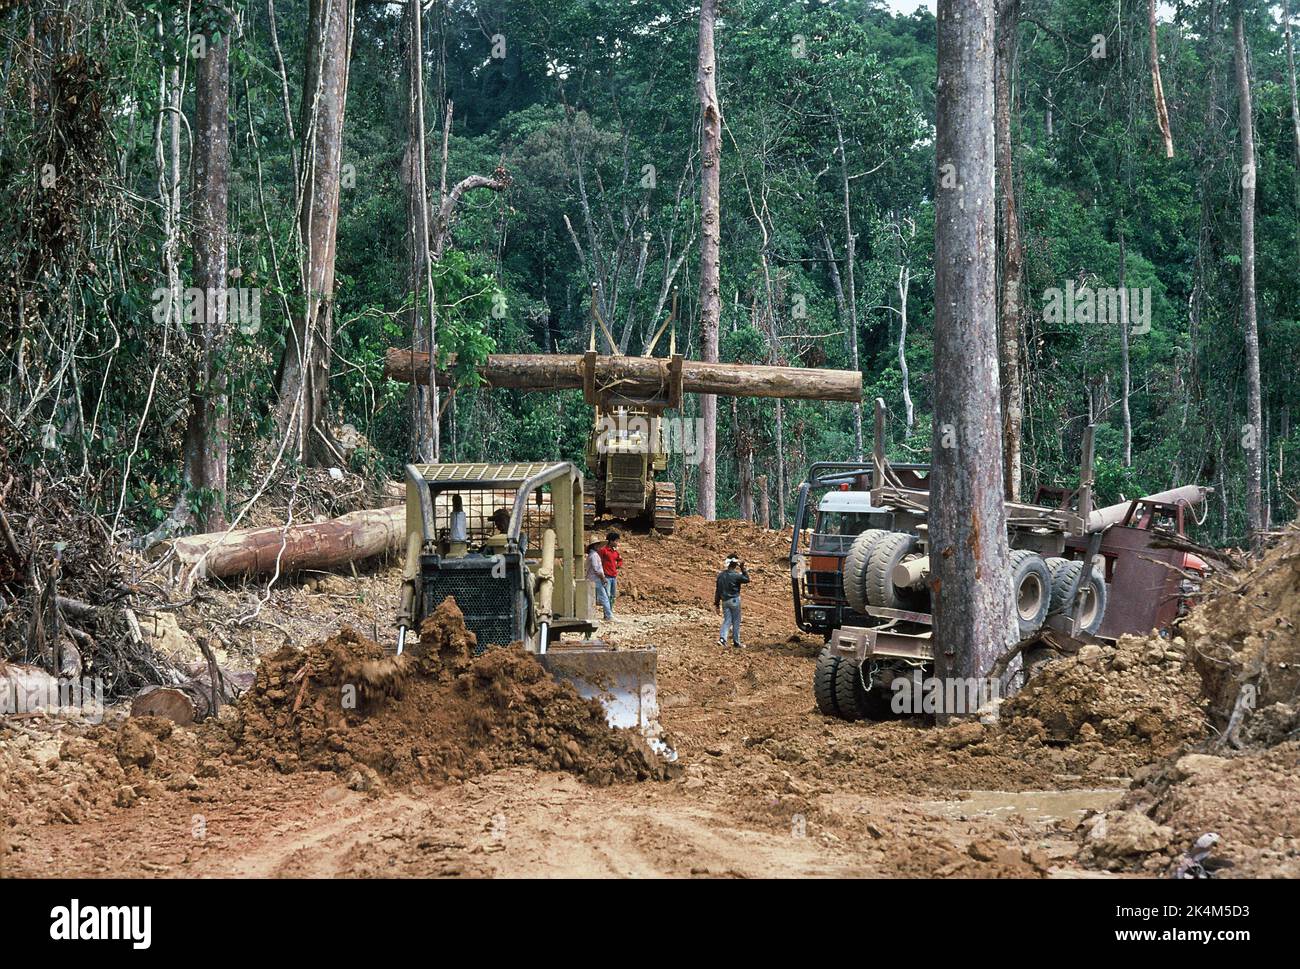 Malaysia. Sabah. Logging concession. Bulldozer clearing site. Stock Photo